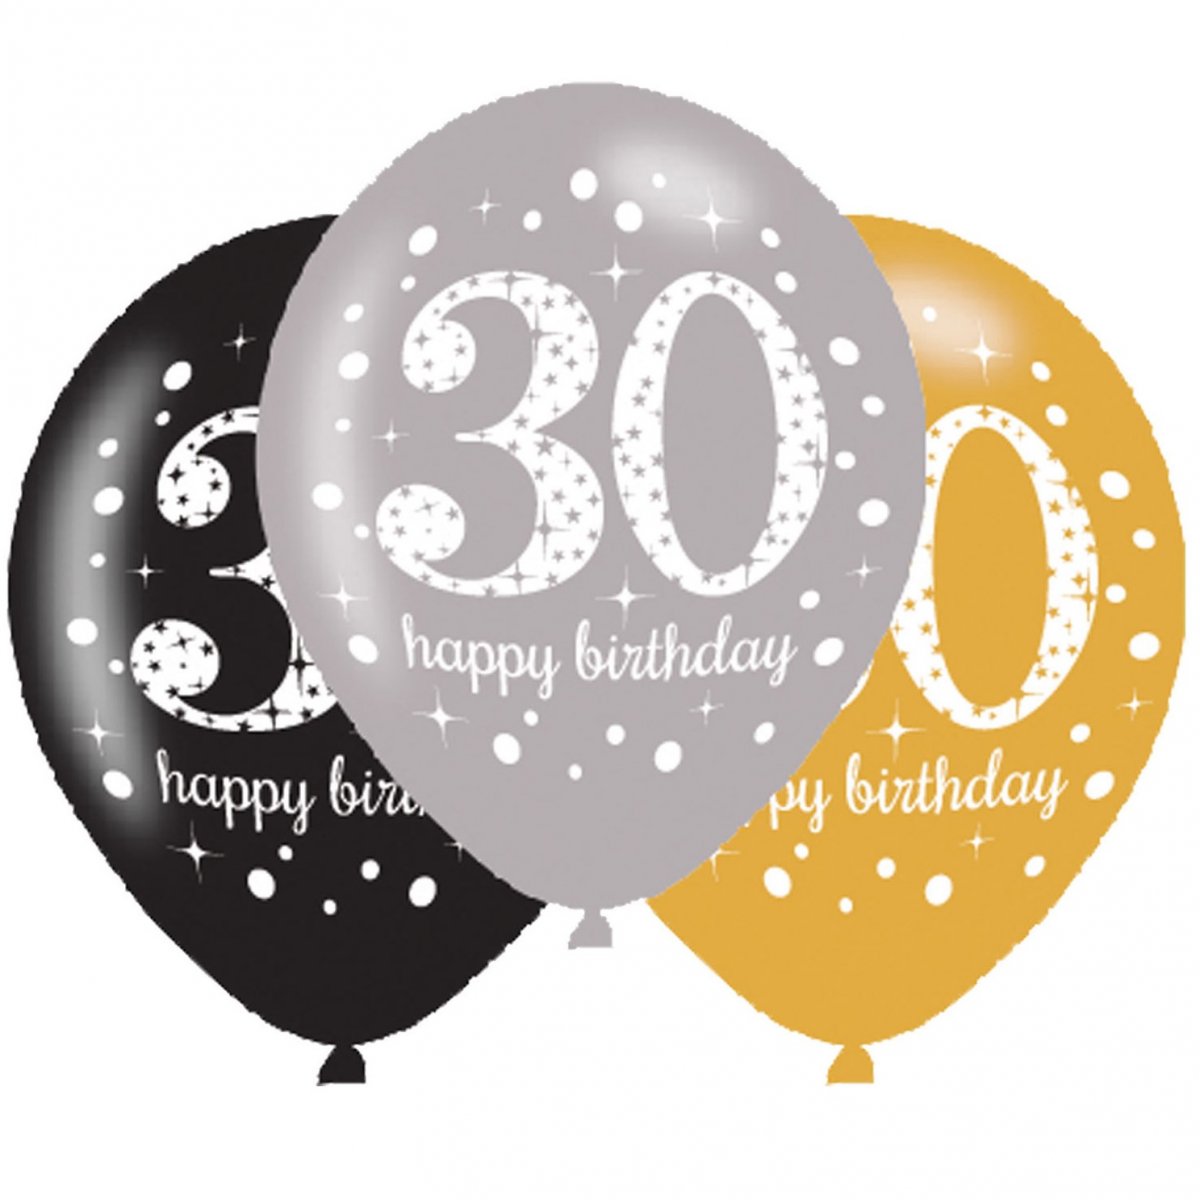 føle Albany farmaceut 30 års fødselsdag - Guld sølv sort - Festpynt til fødselsdag